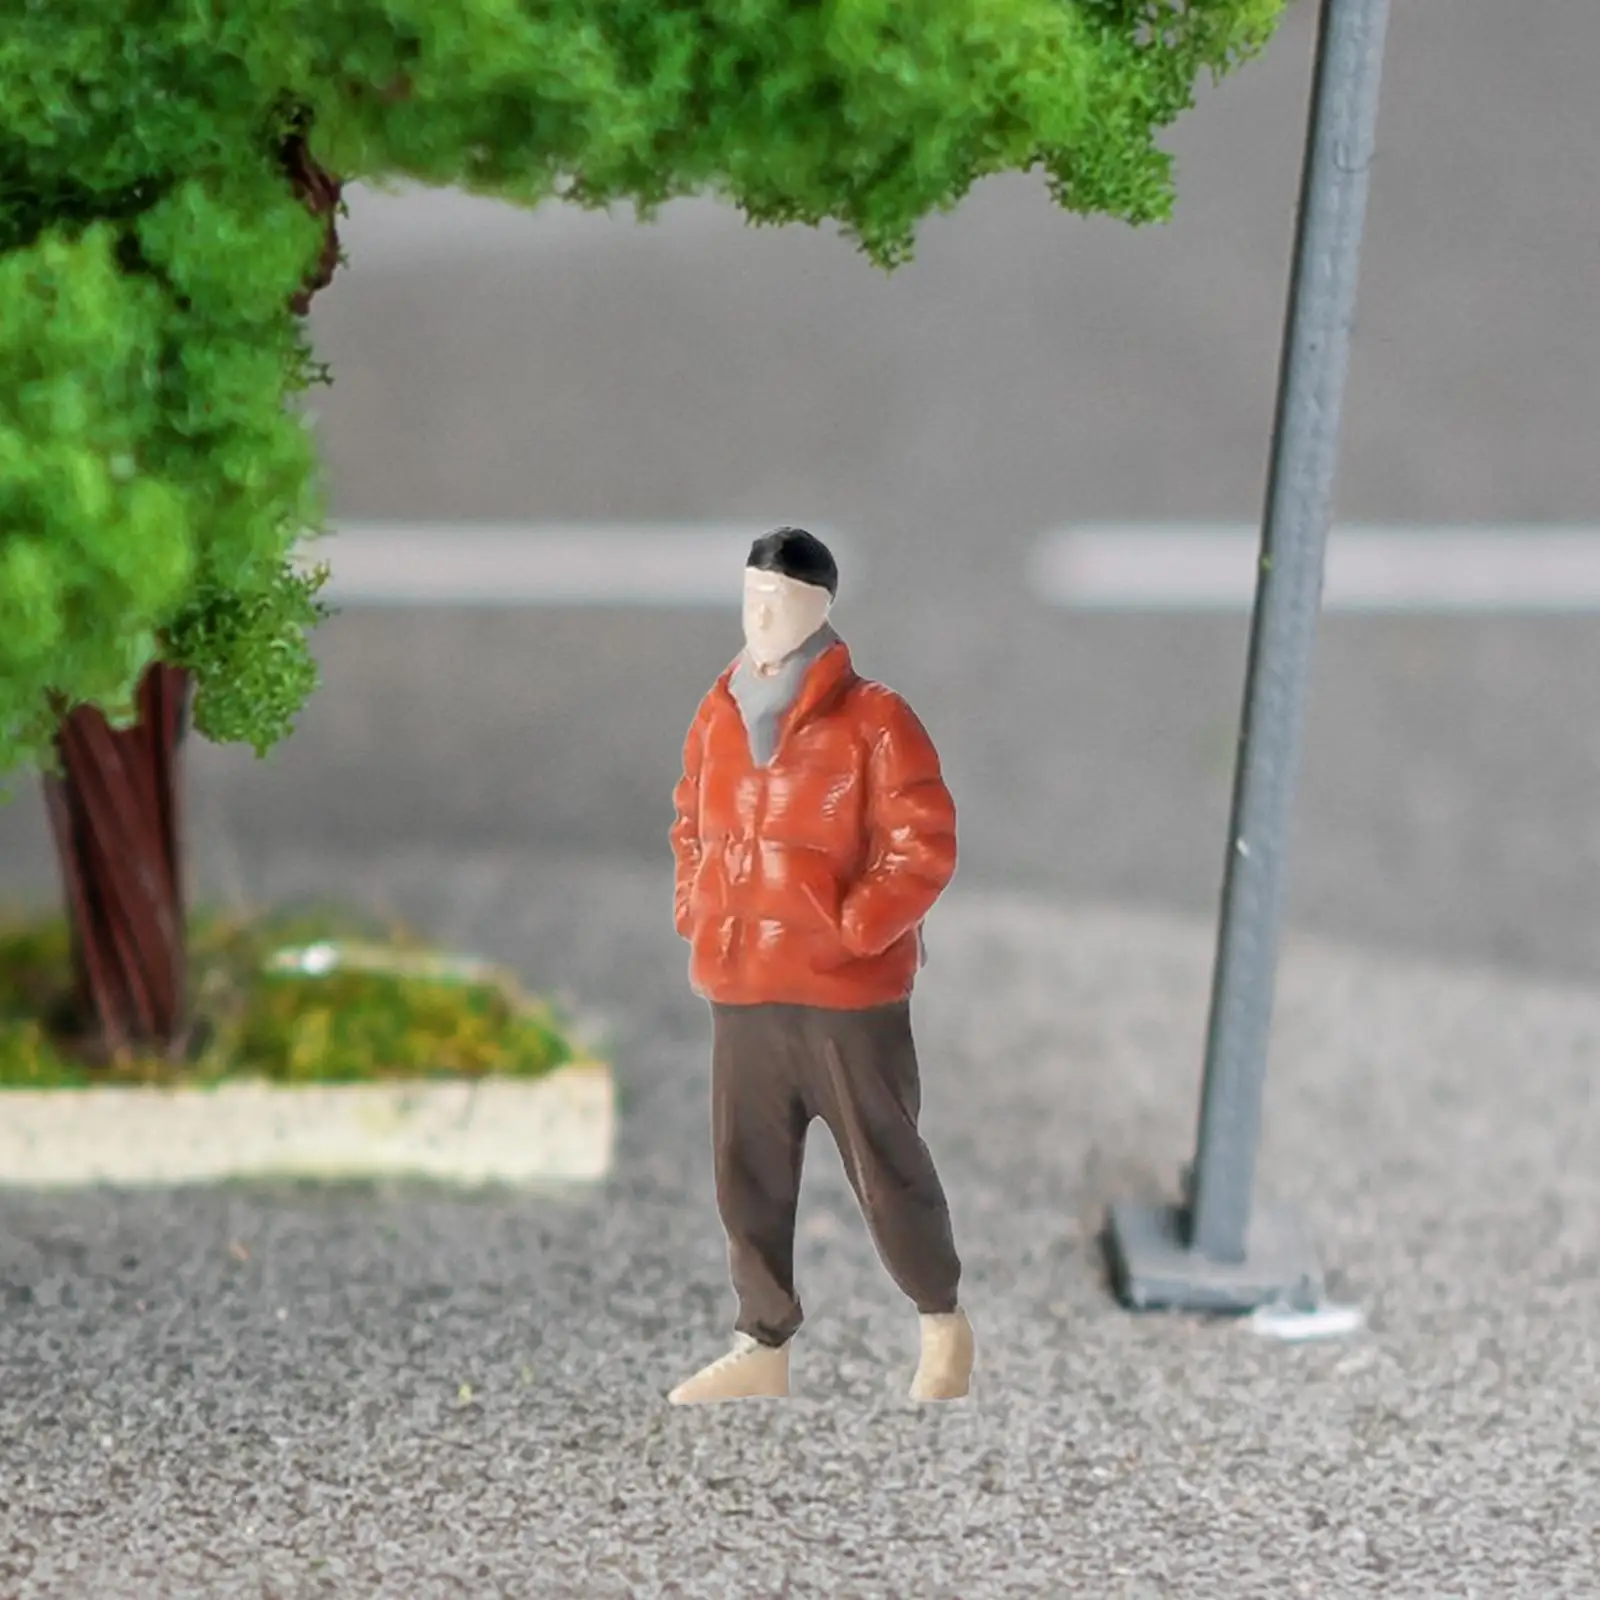 Resin 1:64 Boy Figure Miniature S Scale Micro Landscape Movie Props Diorama Scenery Fairy Garden DIY Projects Layout Decoration